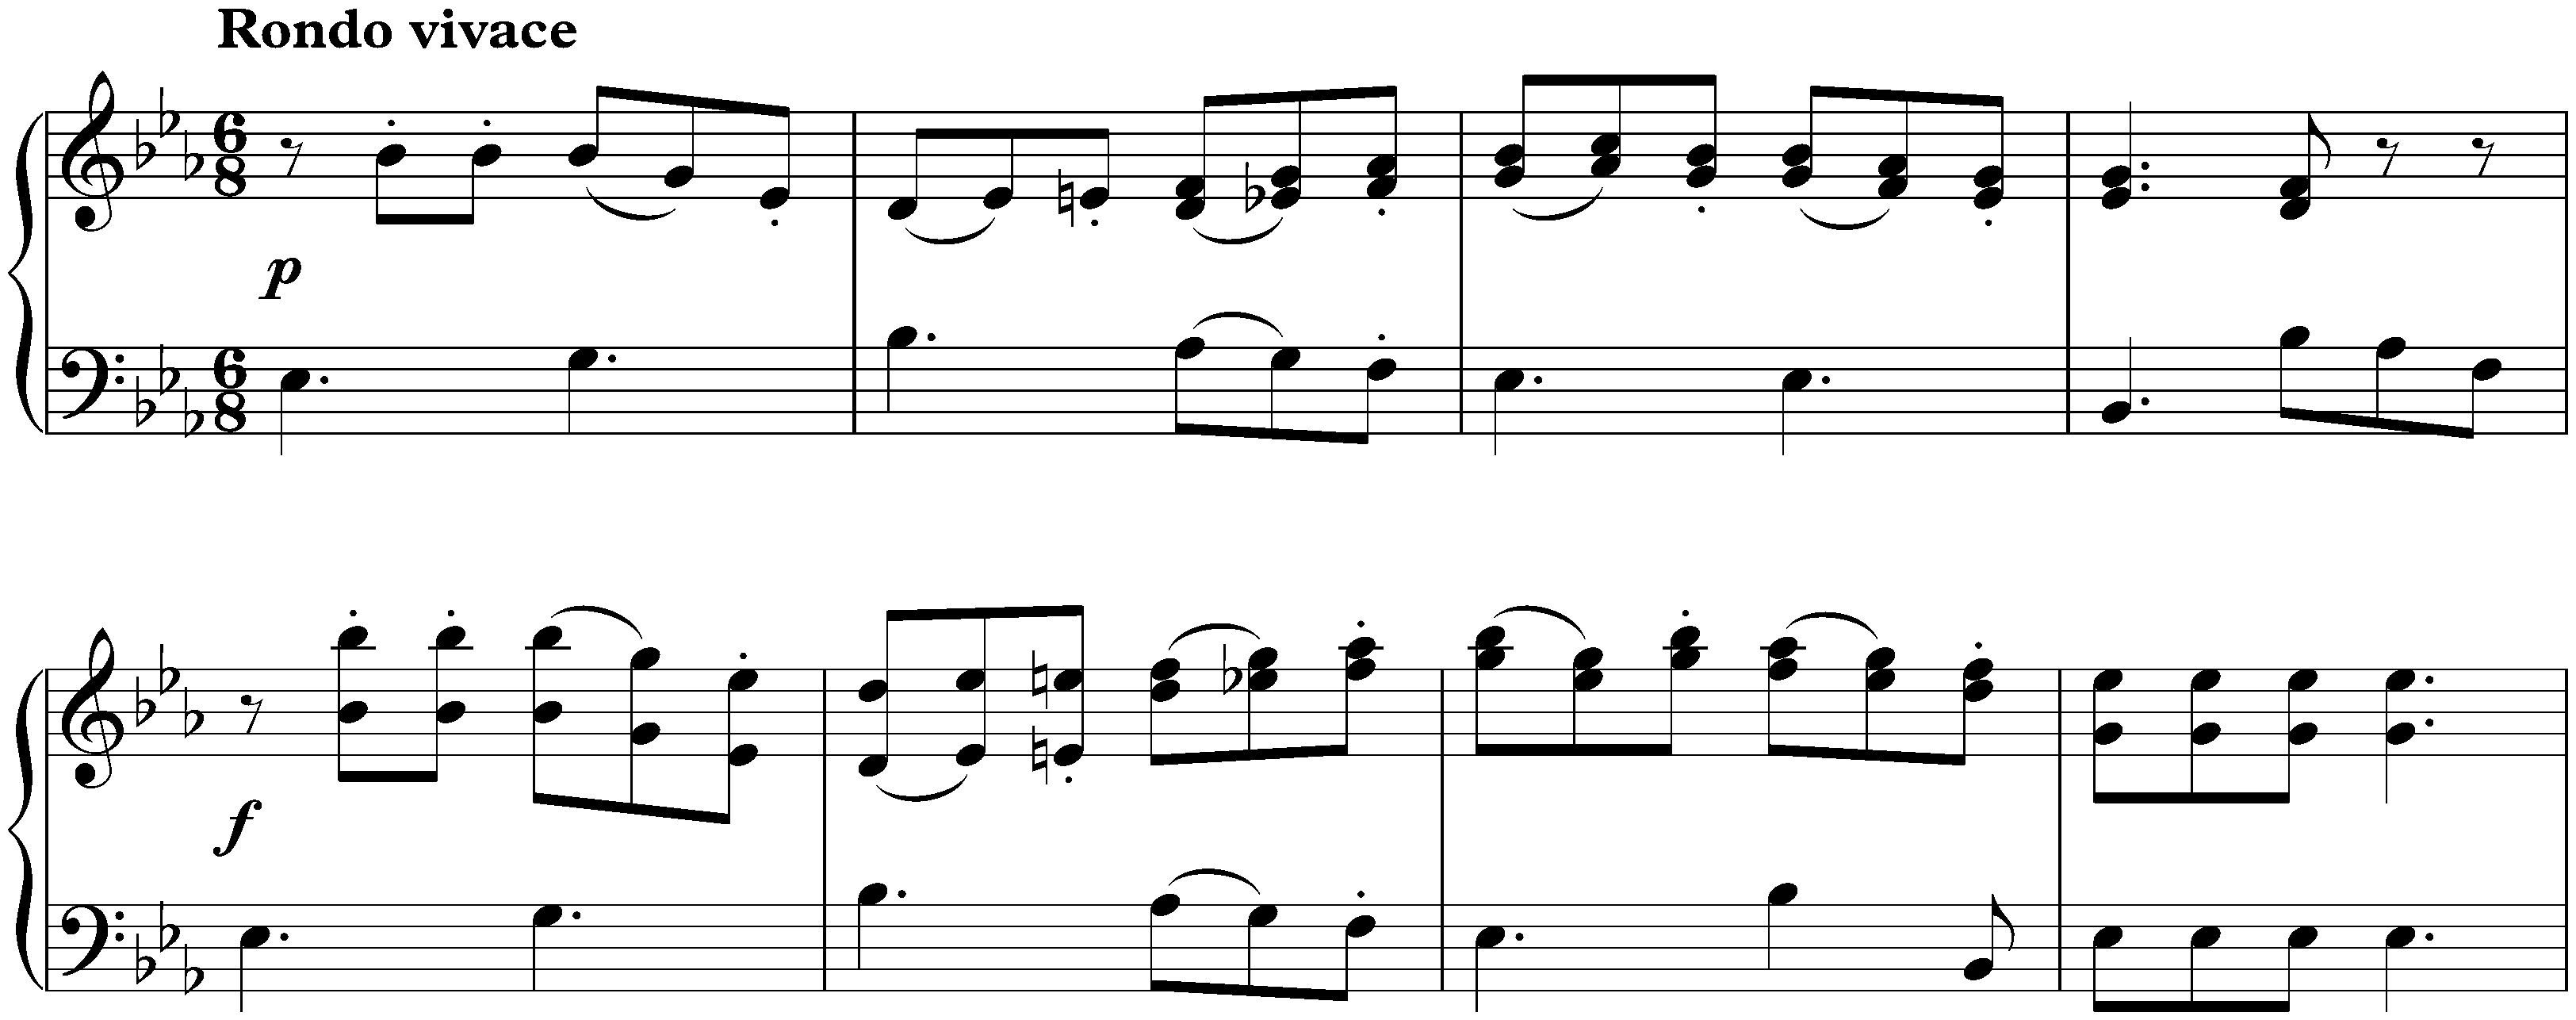 Sonata in E-flat major, WoO 47 no. 1; 3. Rondo vivace